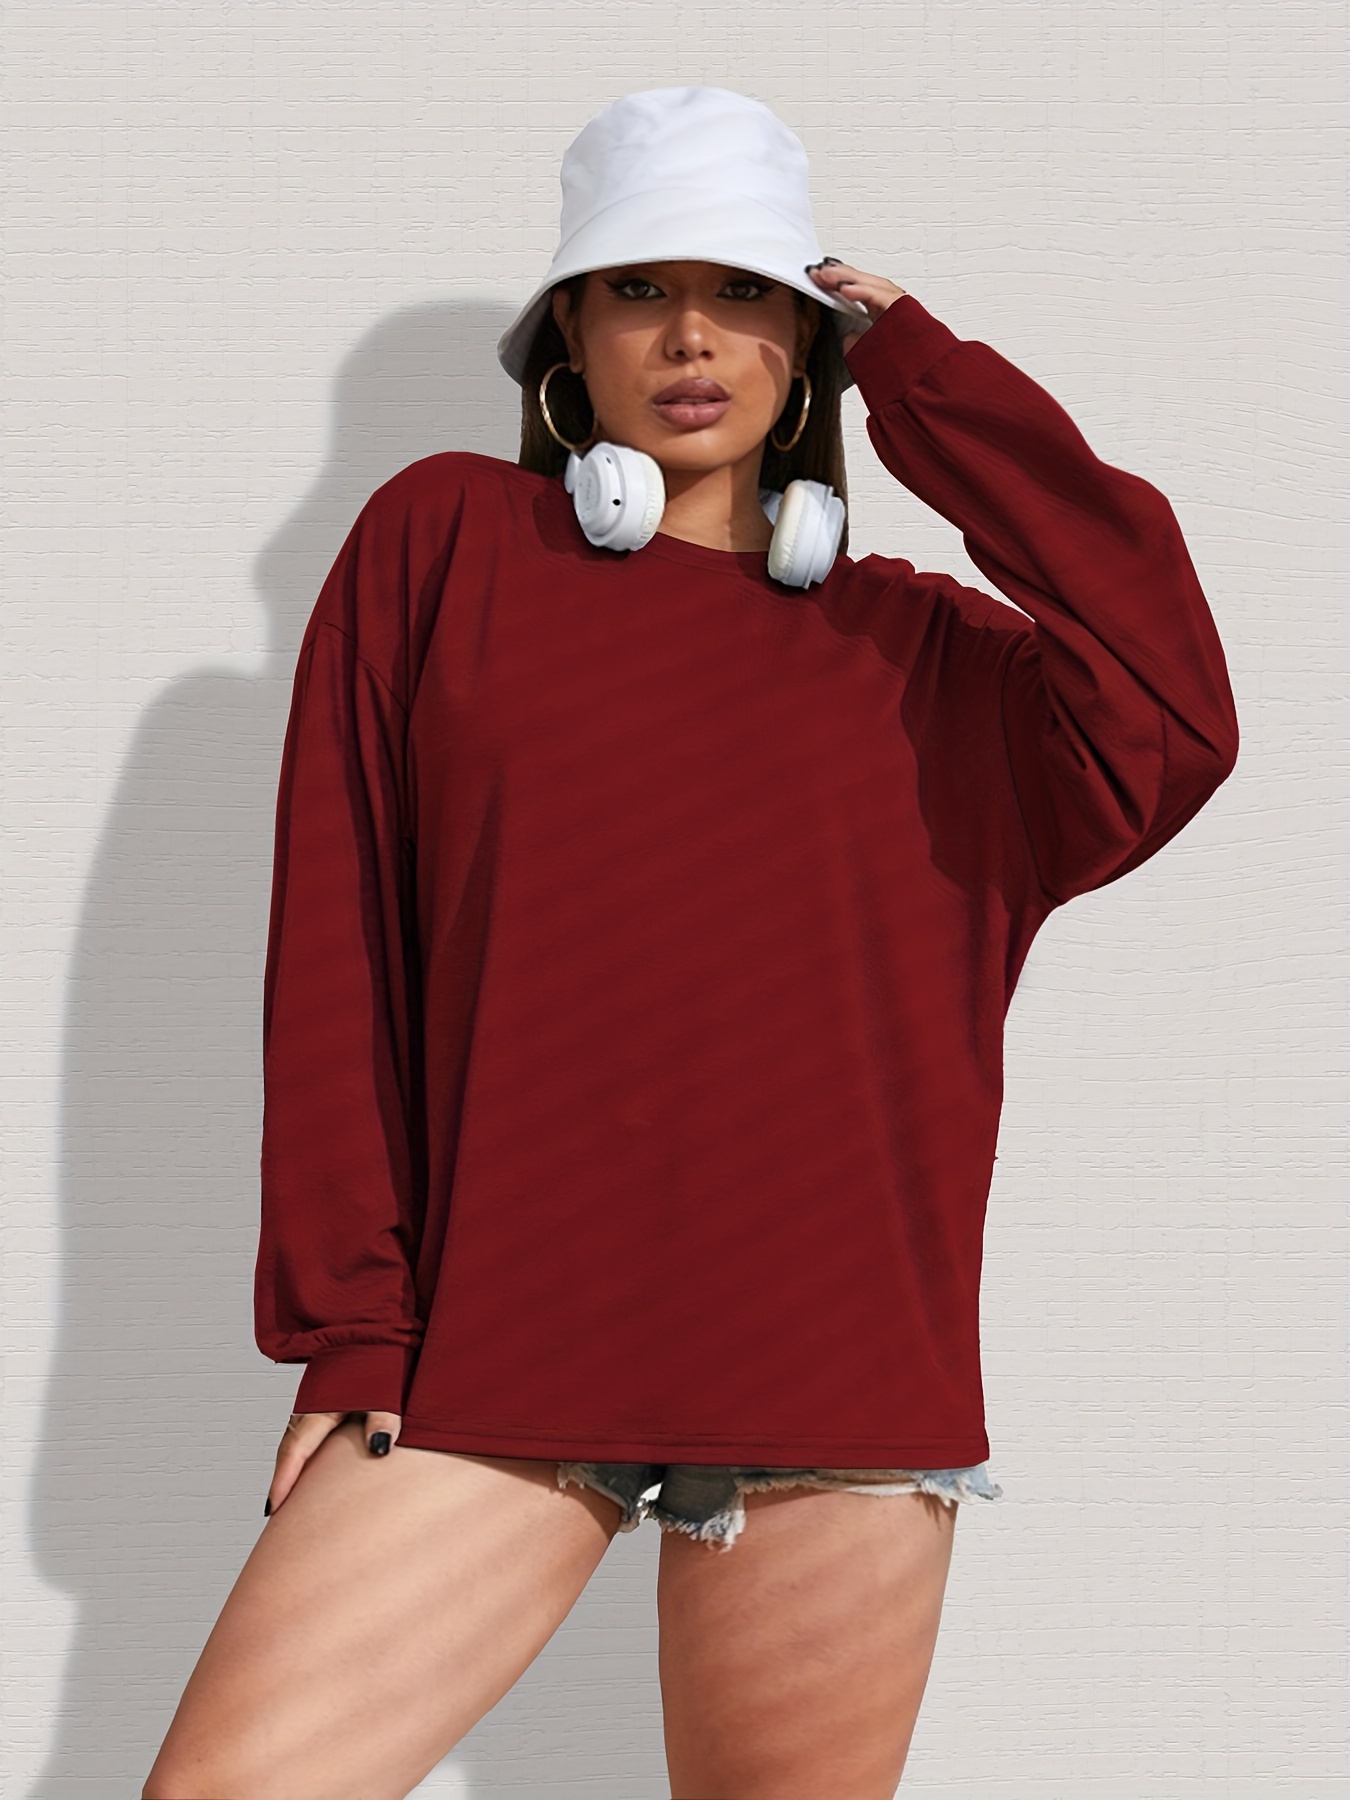 Full Sleeve Round Neck Plain Maroon Ladies Sweatshirt, Size: Small